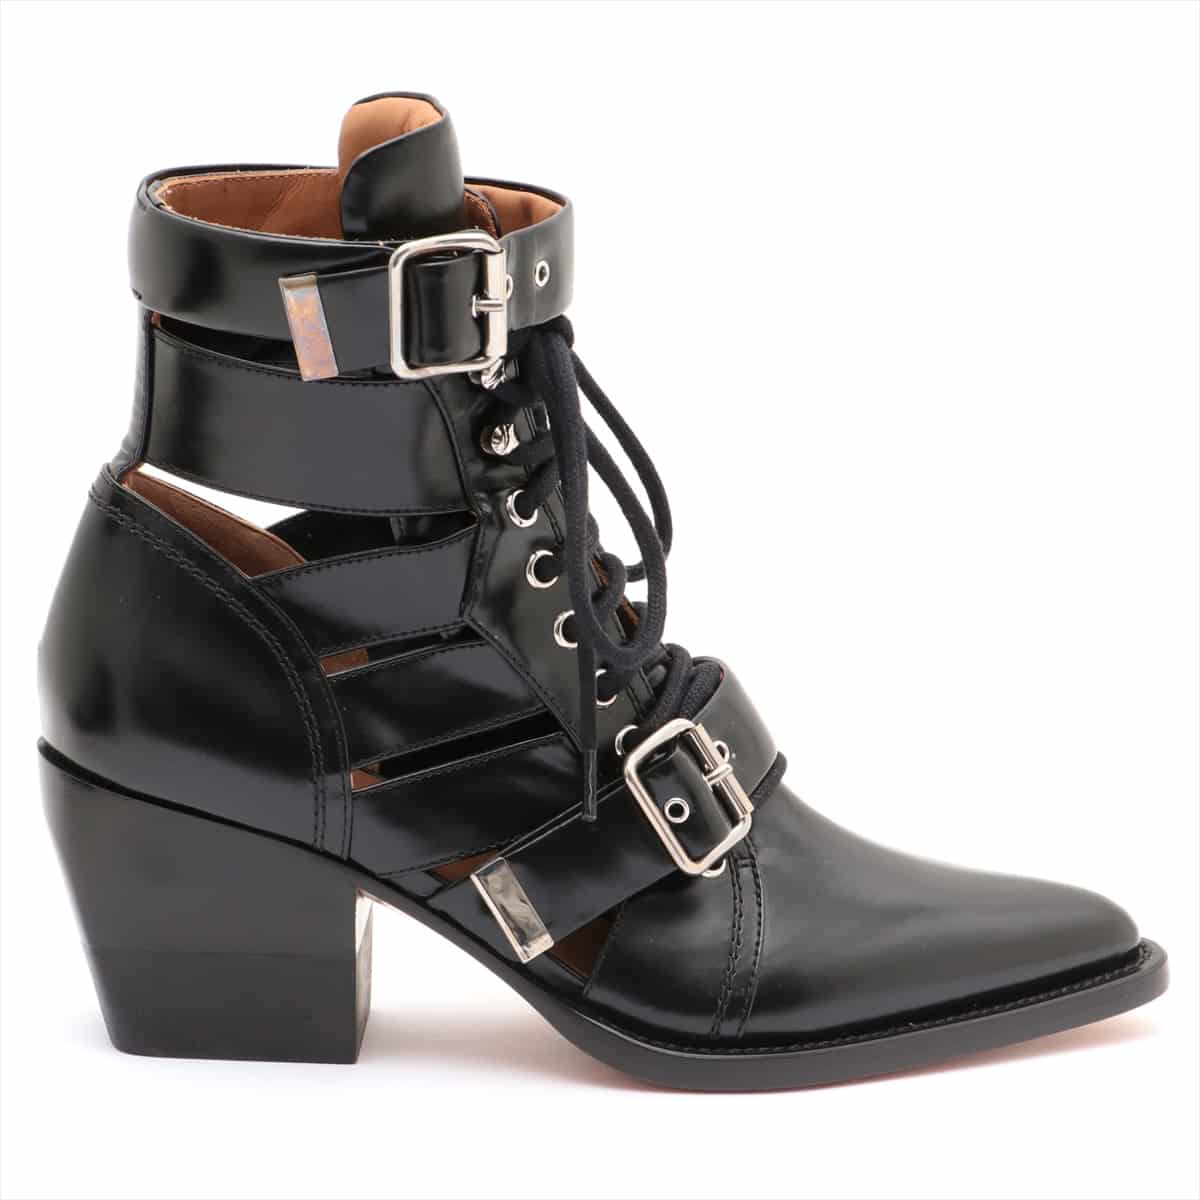 Chloe Leather Boots 39.5 Ladies' Black